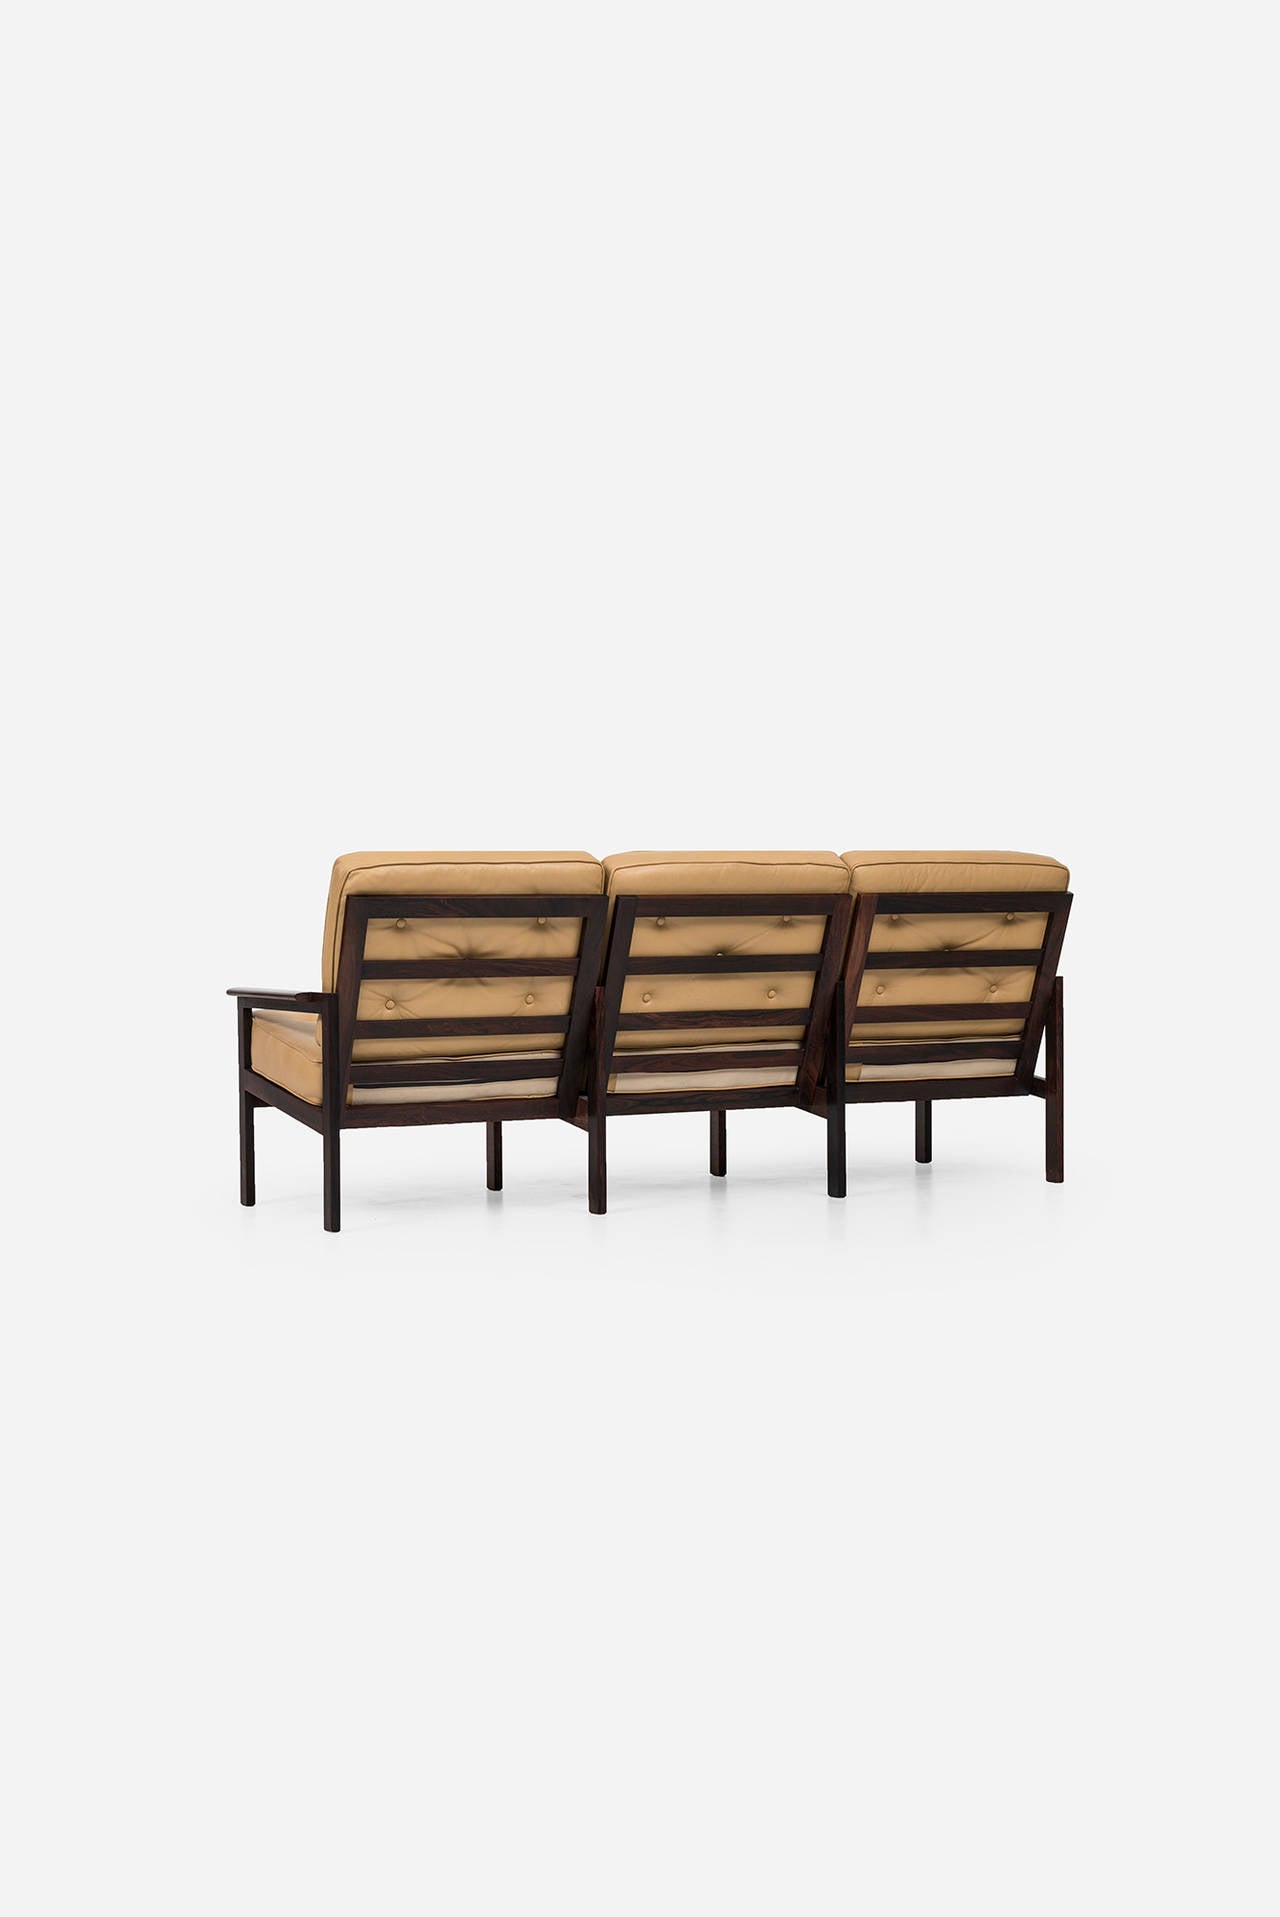 Illum Wikkelsø sofa model Capella by Niels Eilersen in Denmark 1